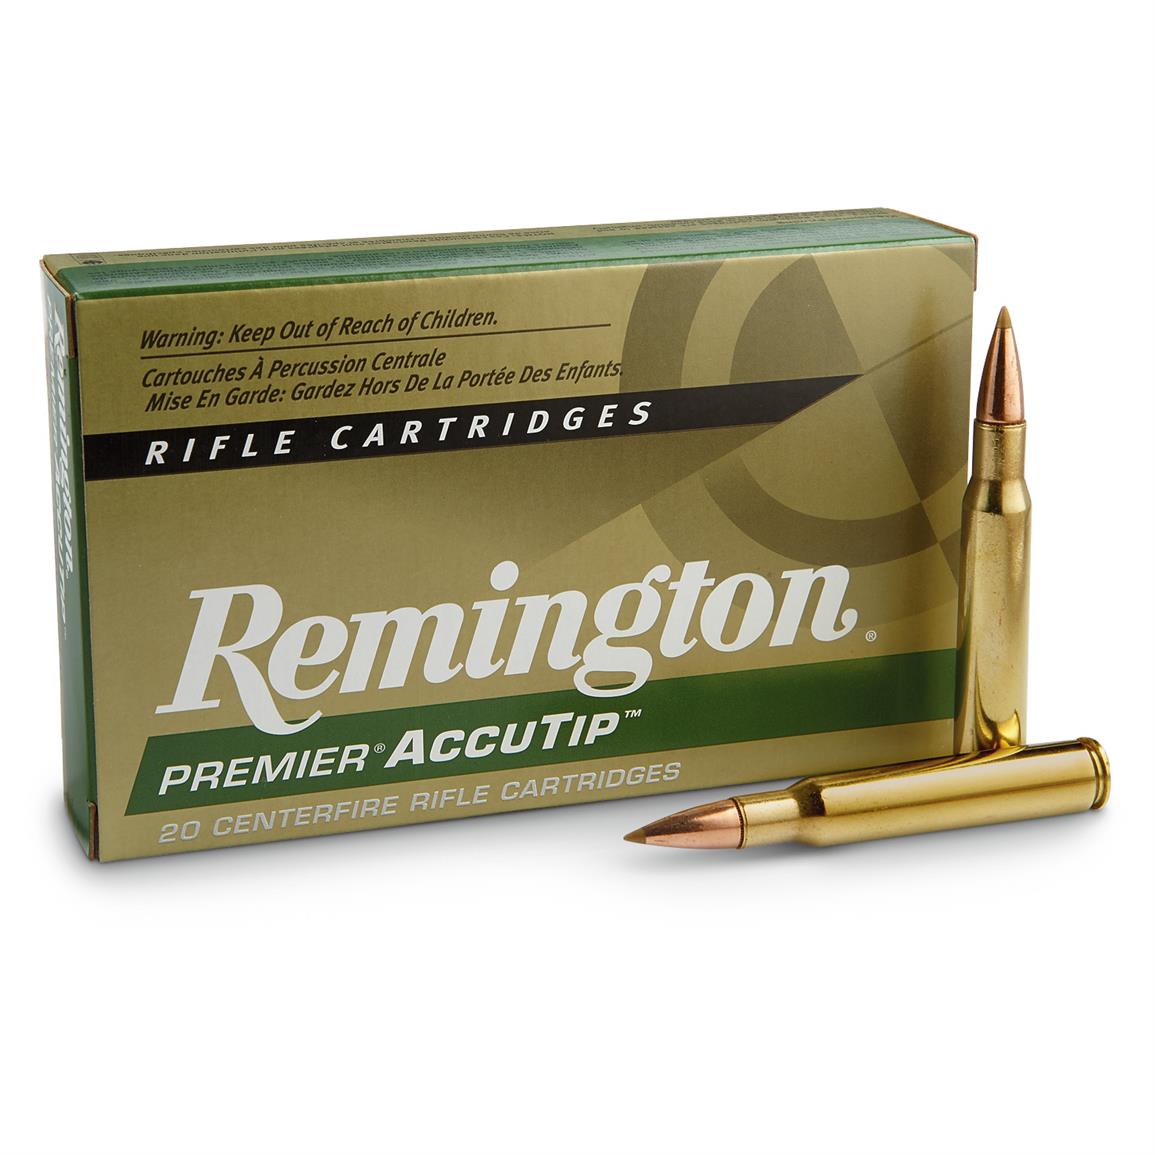 Remington premiere accutip 30-06, 10.7g.